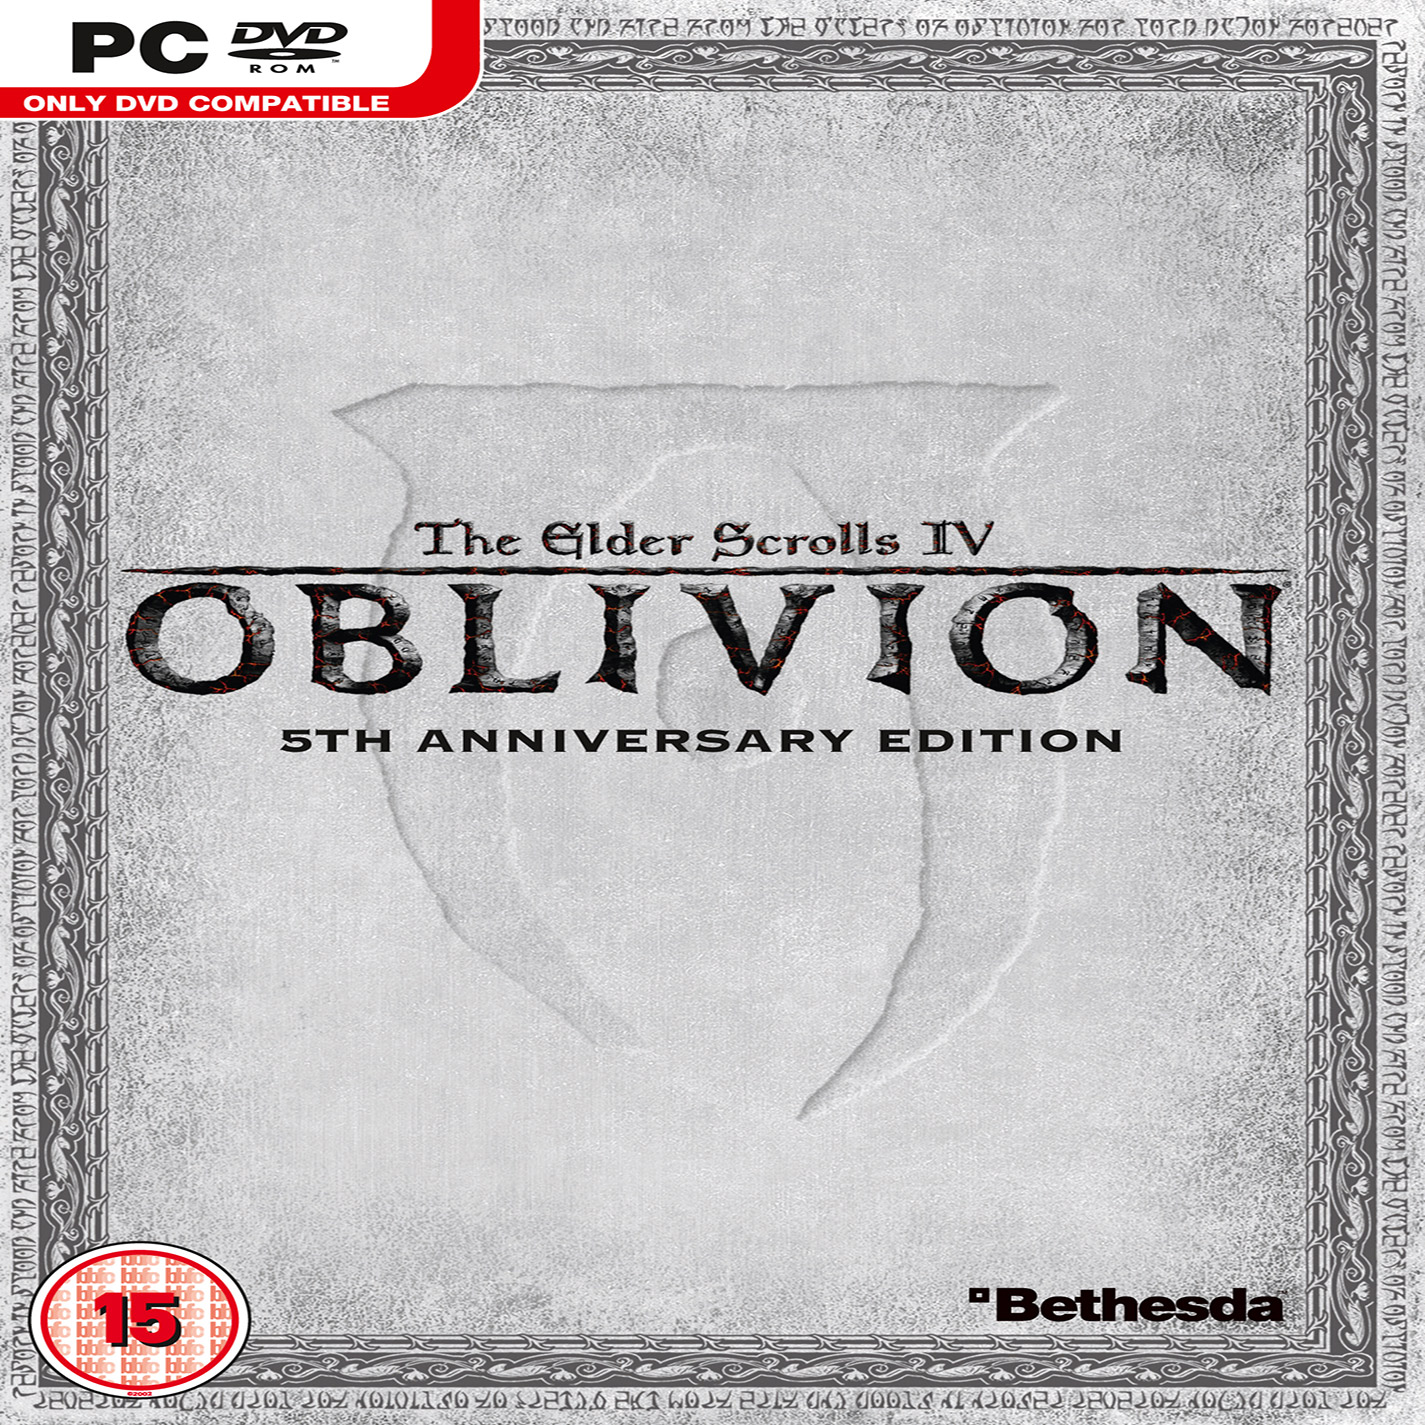 The Elder Scrolls IV: Oblivion (5th Anniversary Edition) - pedn CD obal